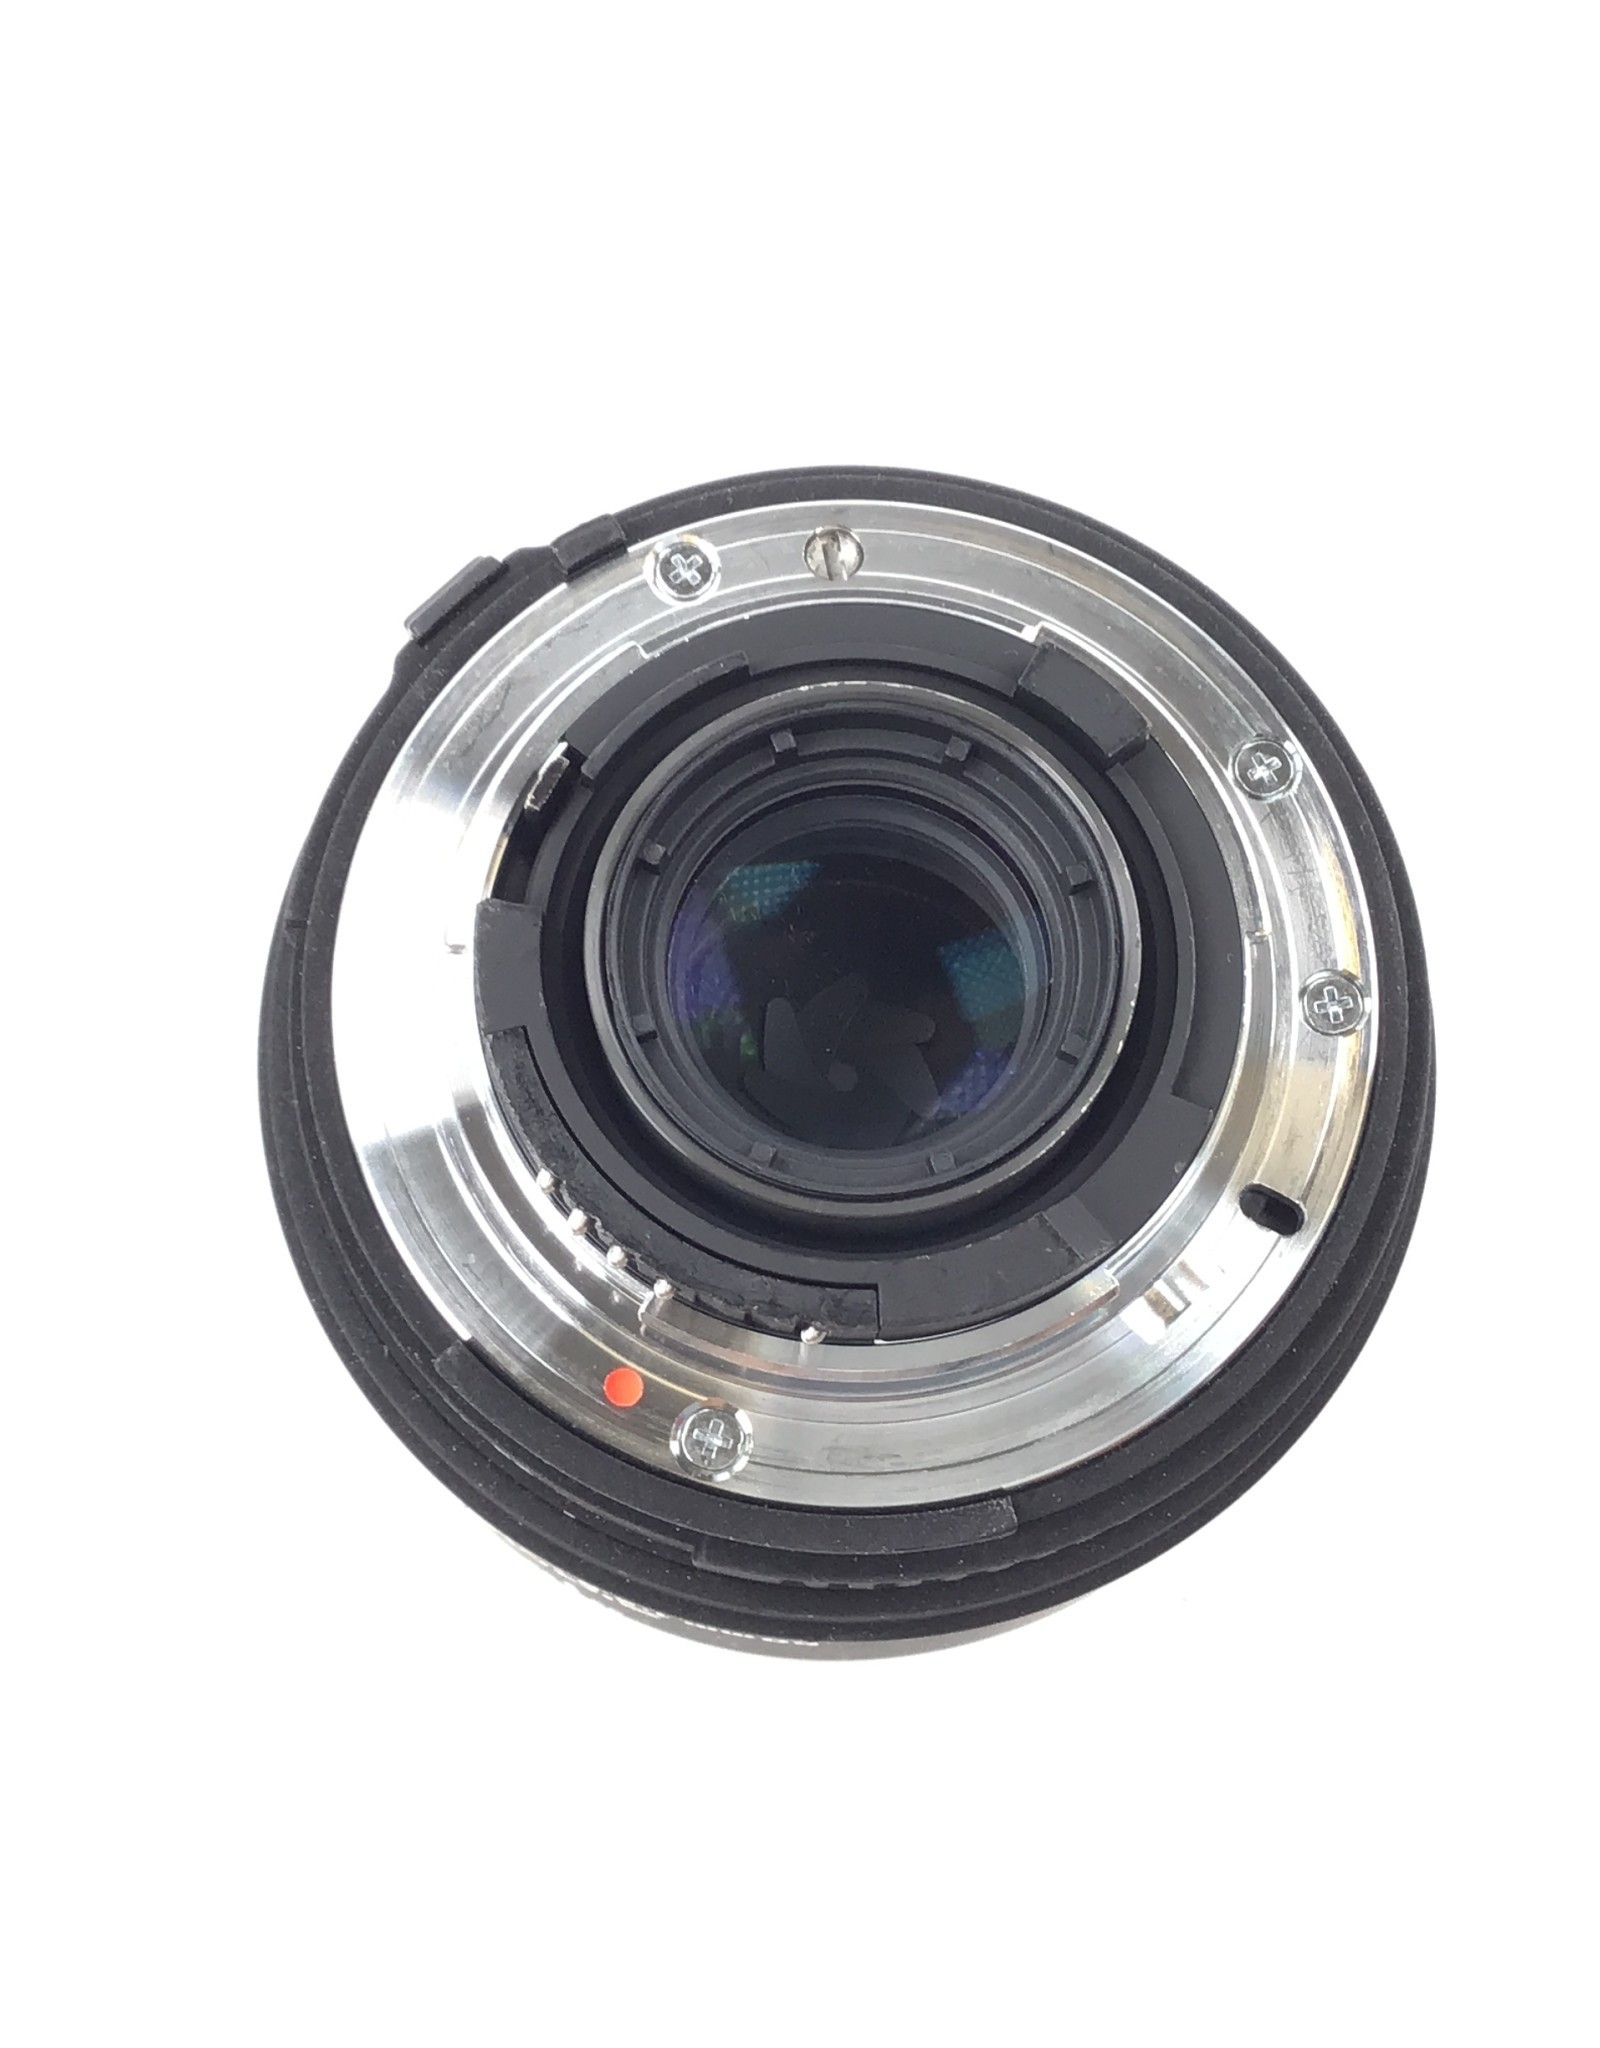 SIGMA Sigma 50mm f2.8 DG Macro Lens for Nikon Used Good